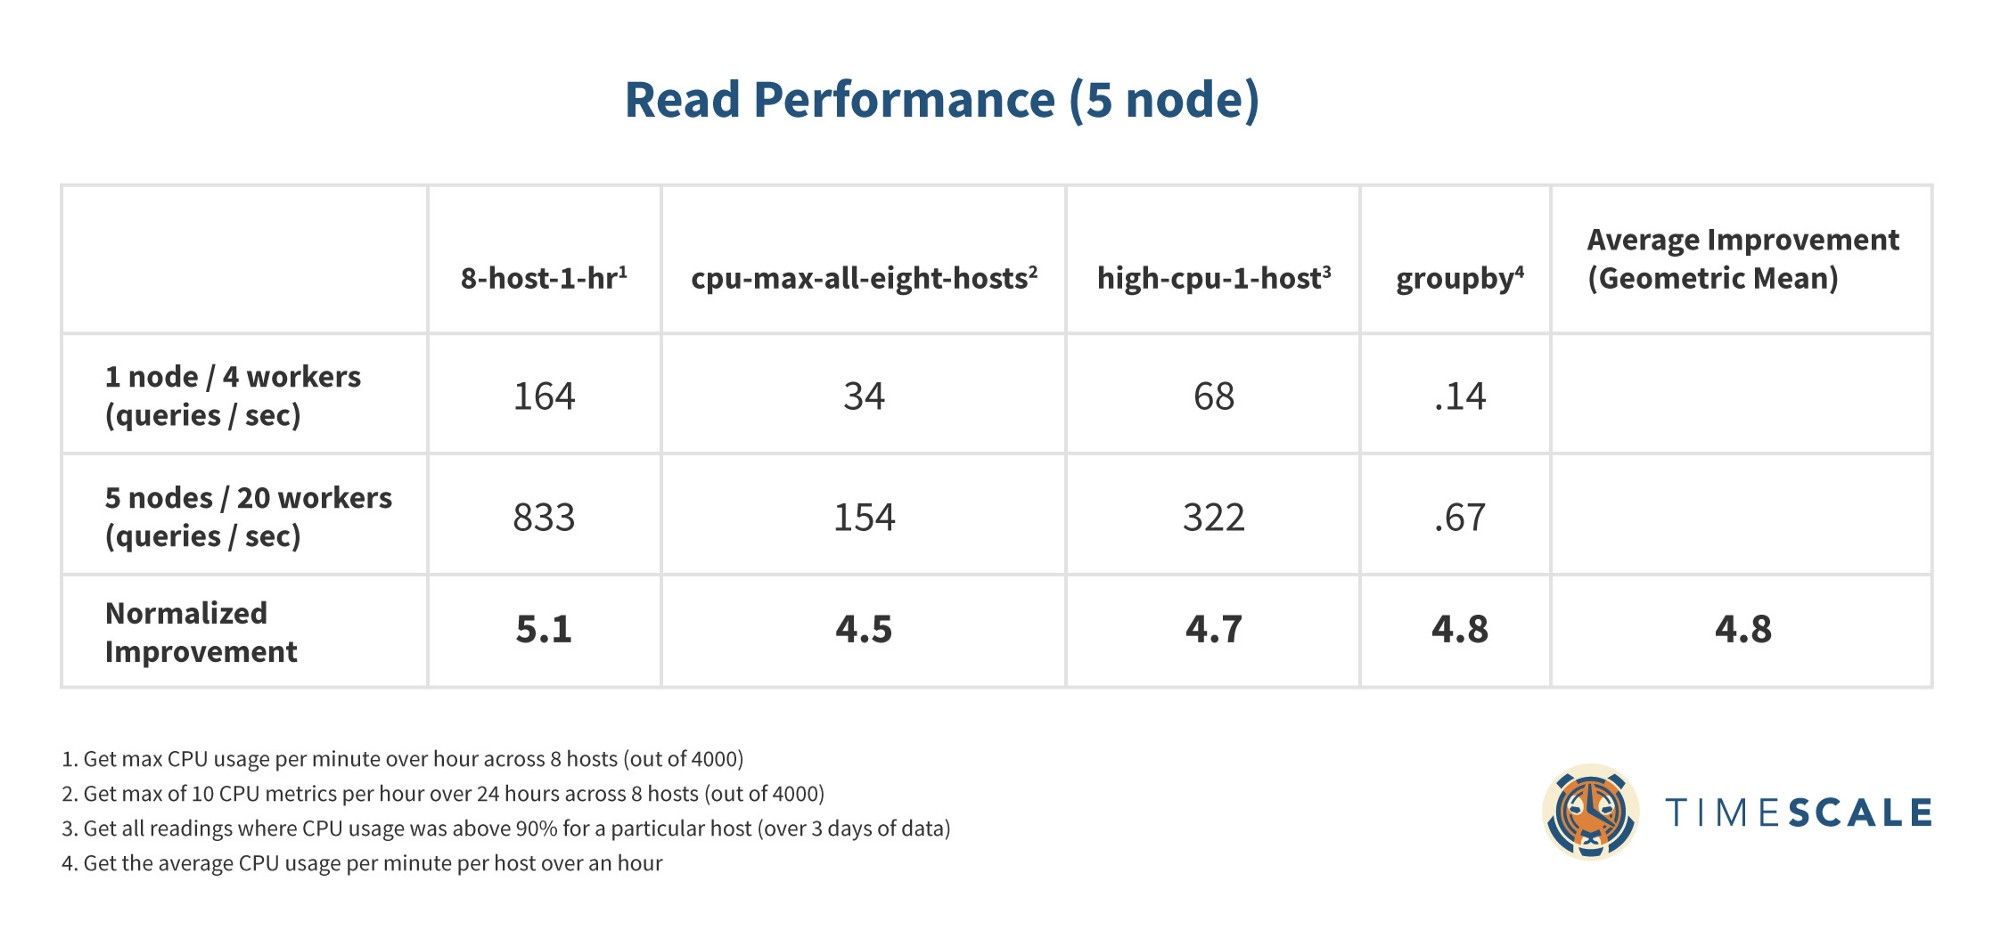 TimescaleDB read performance improvements on a five-node setup. 